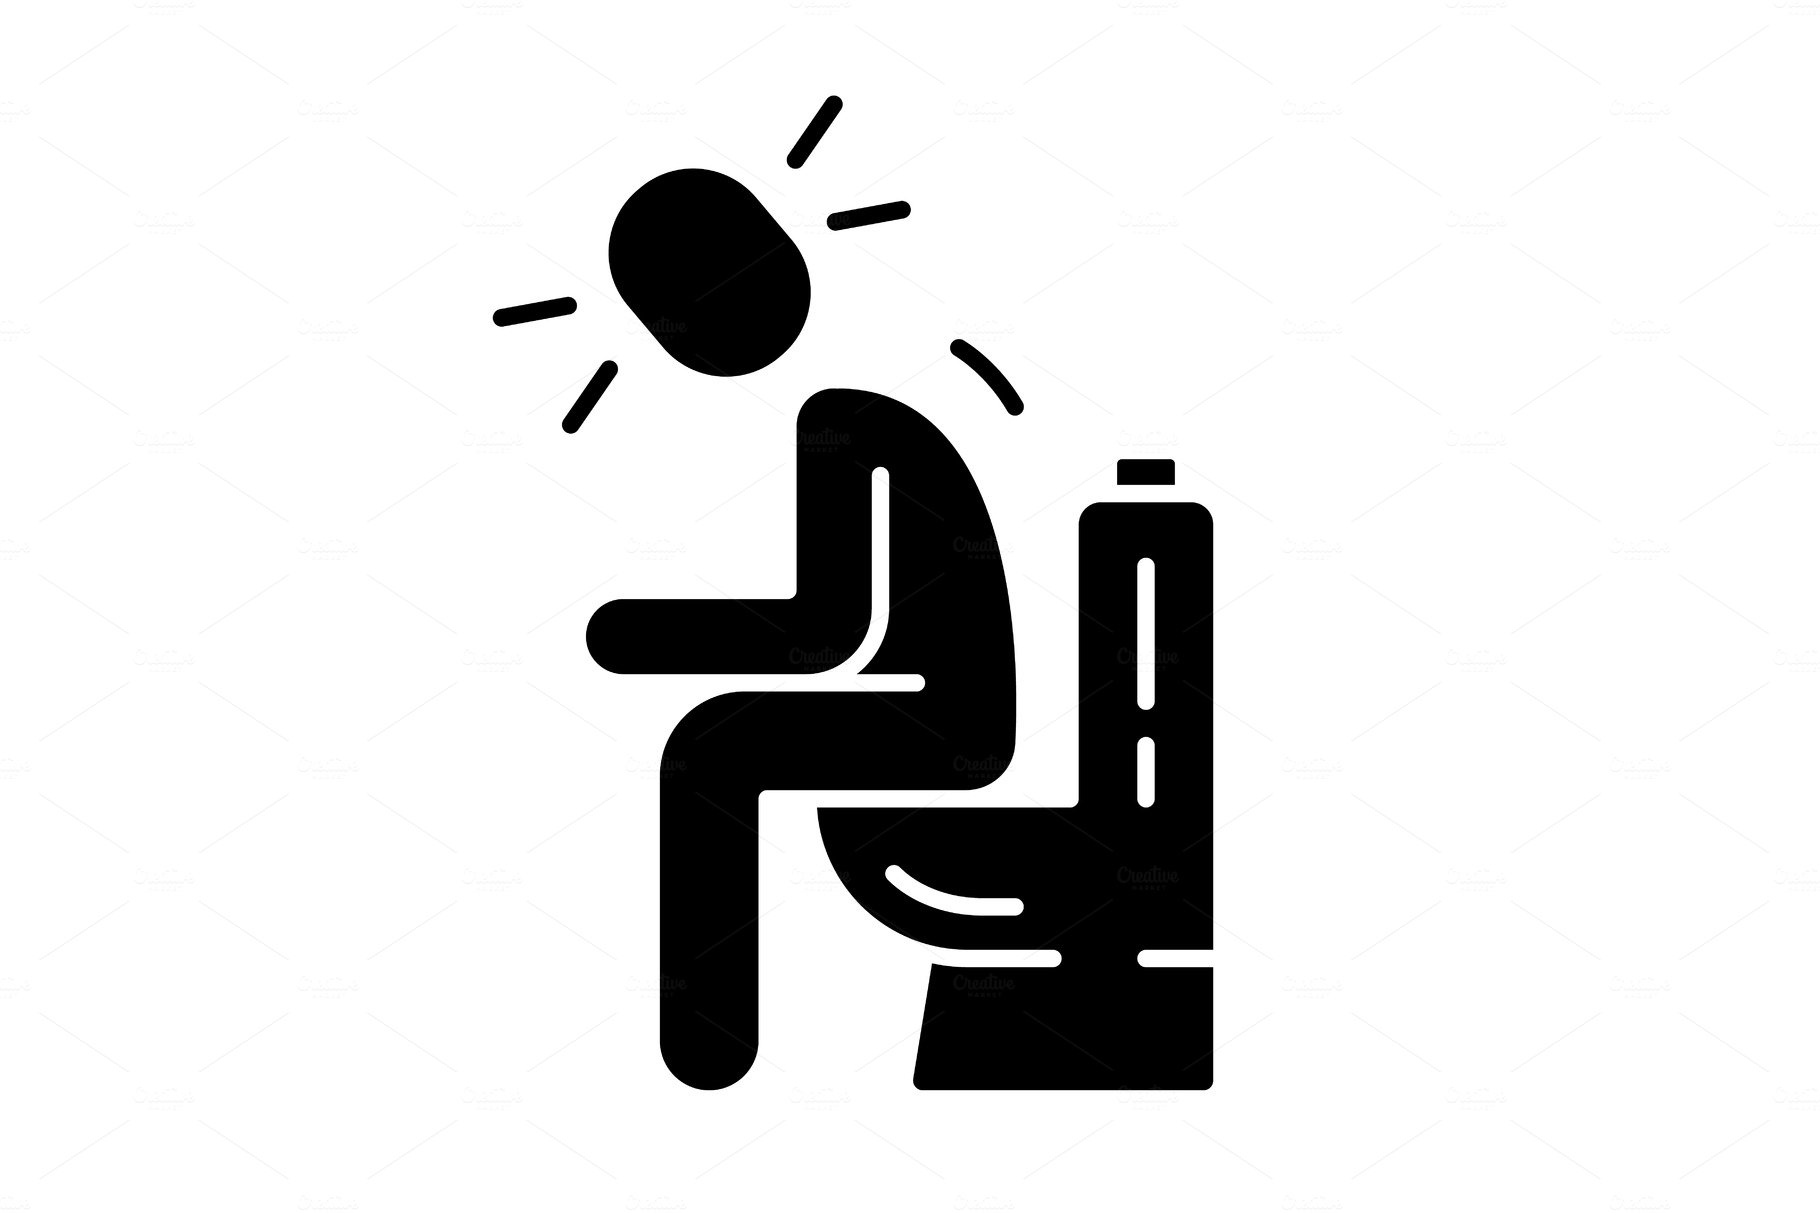 Diarrhea, constipation glyph icon cover image.